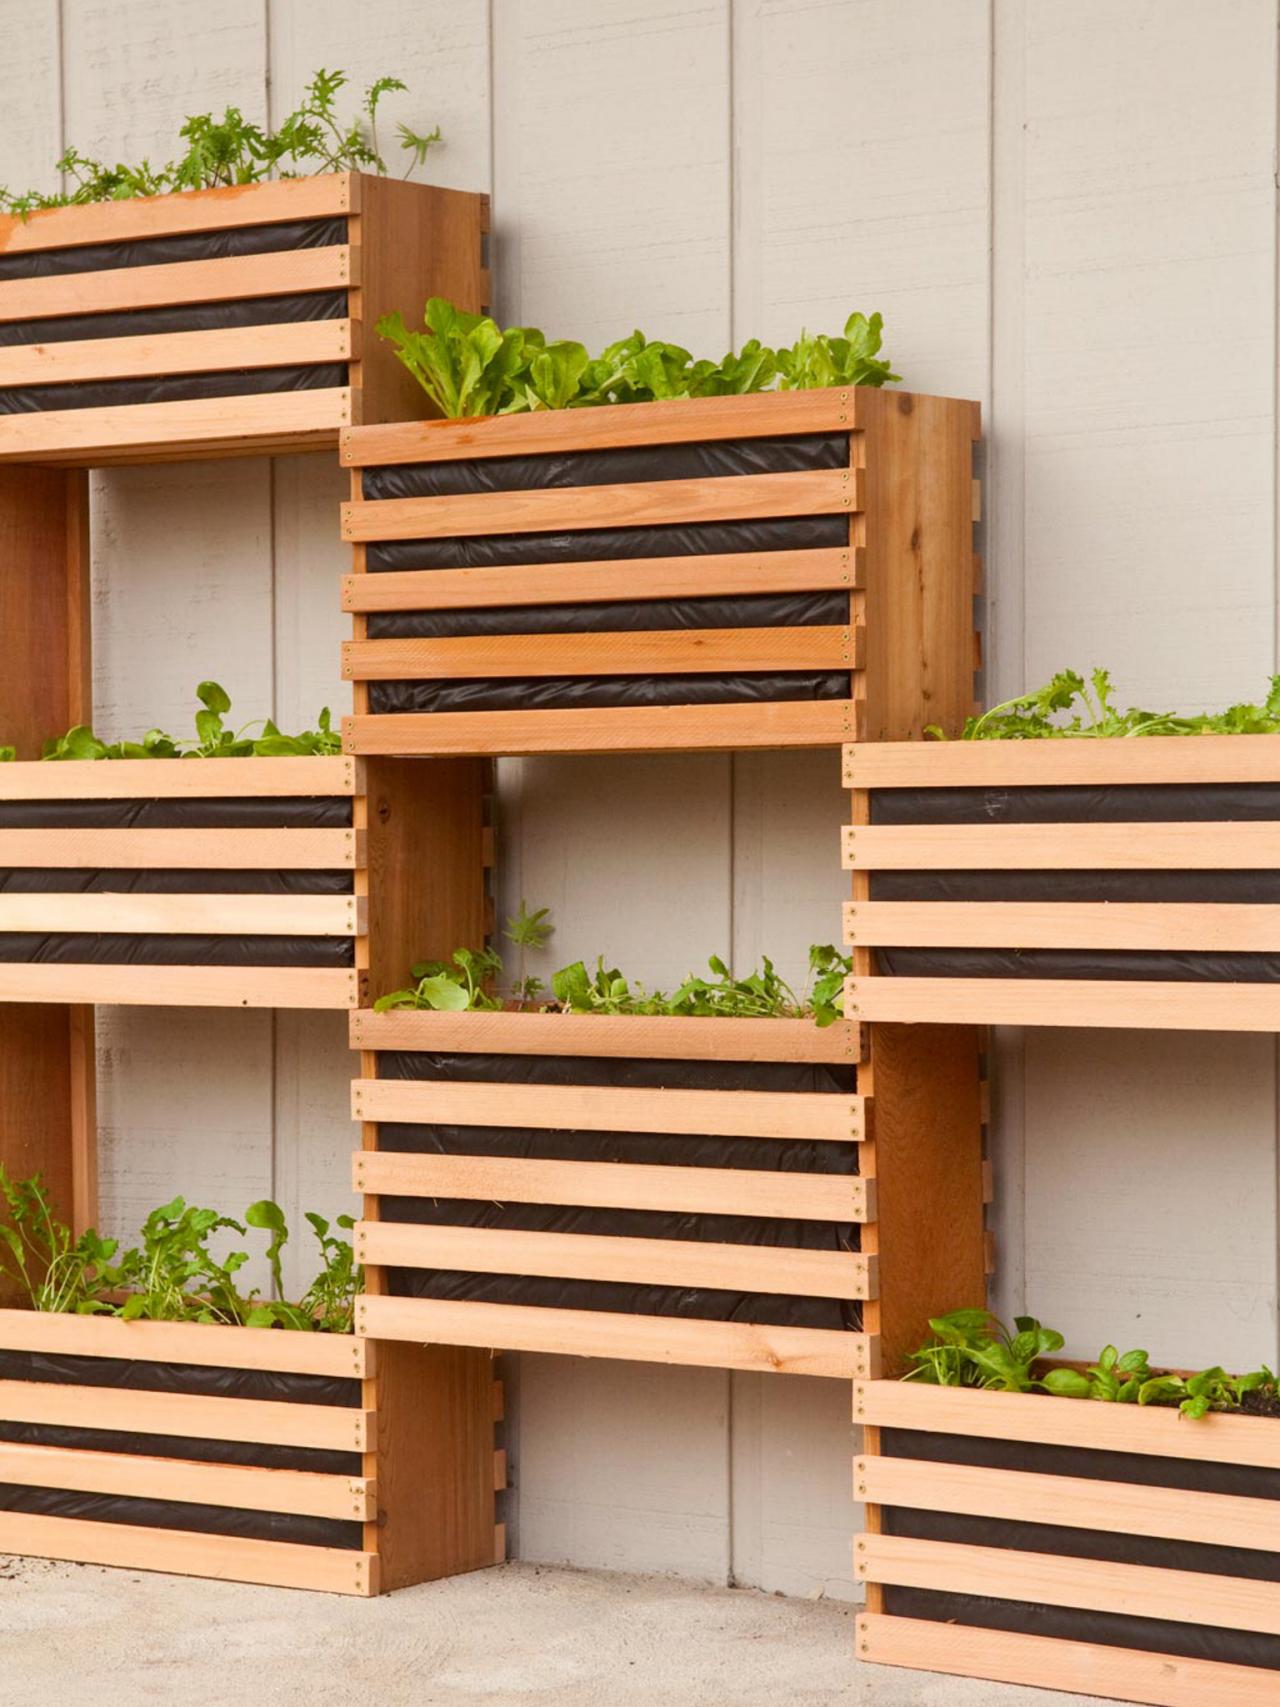 10 Vertical Planter Ideas For Summer | HGTV's Decorating ...